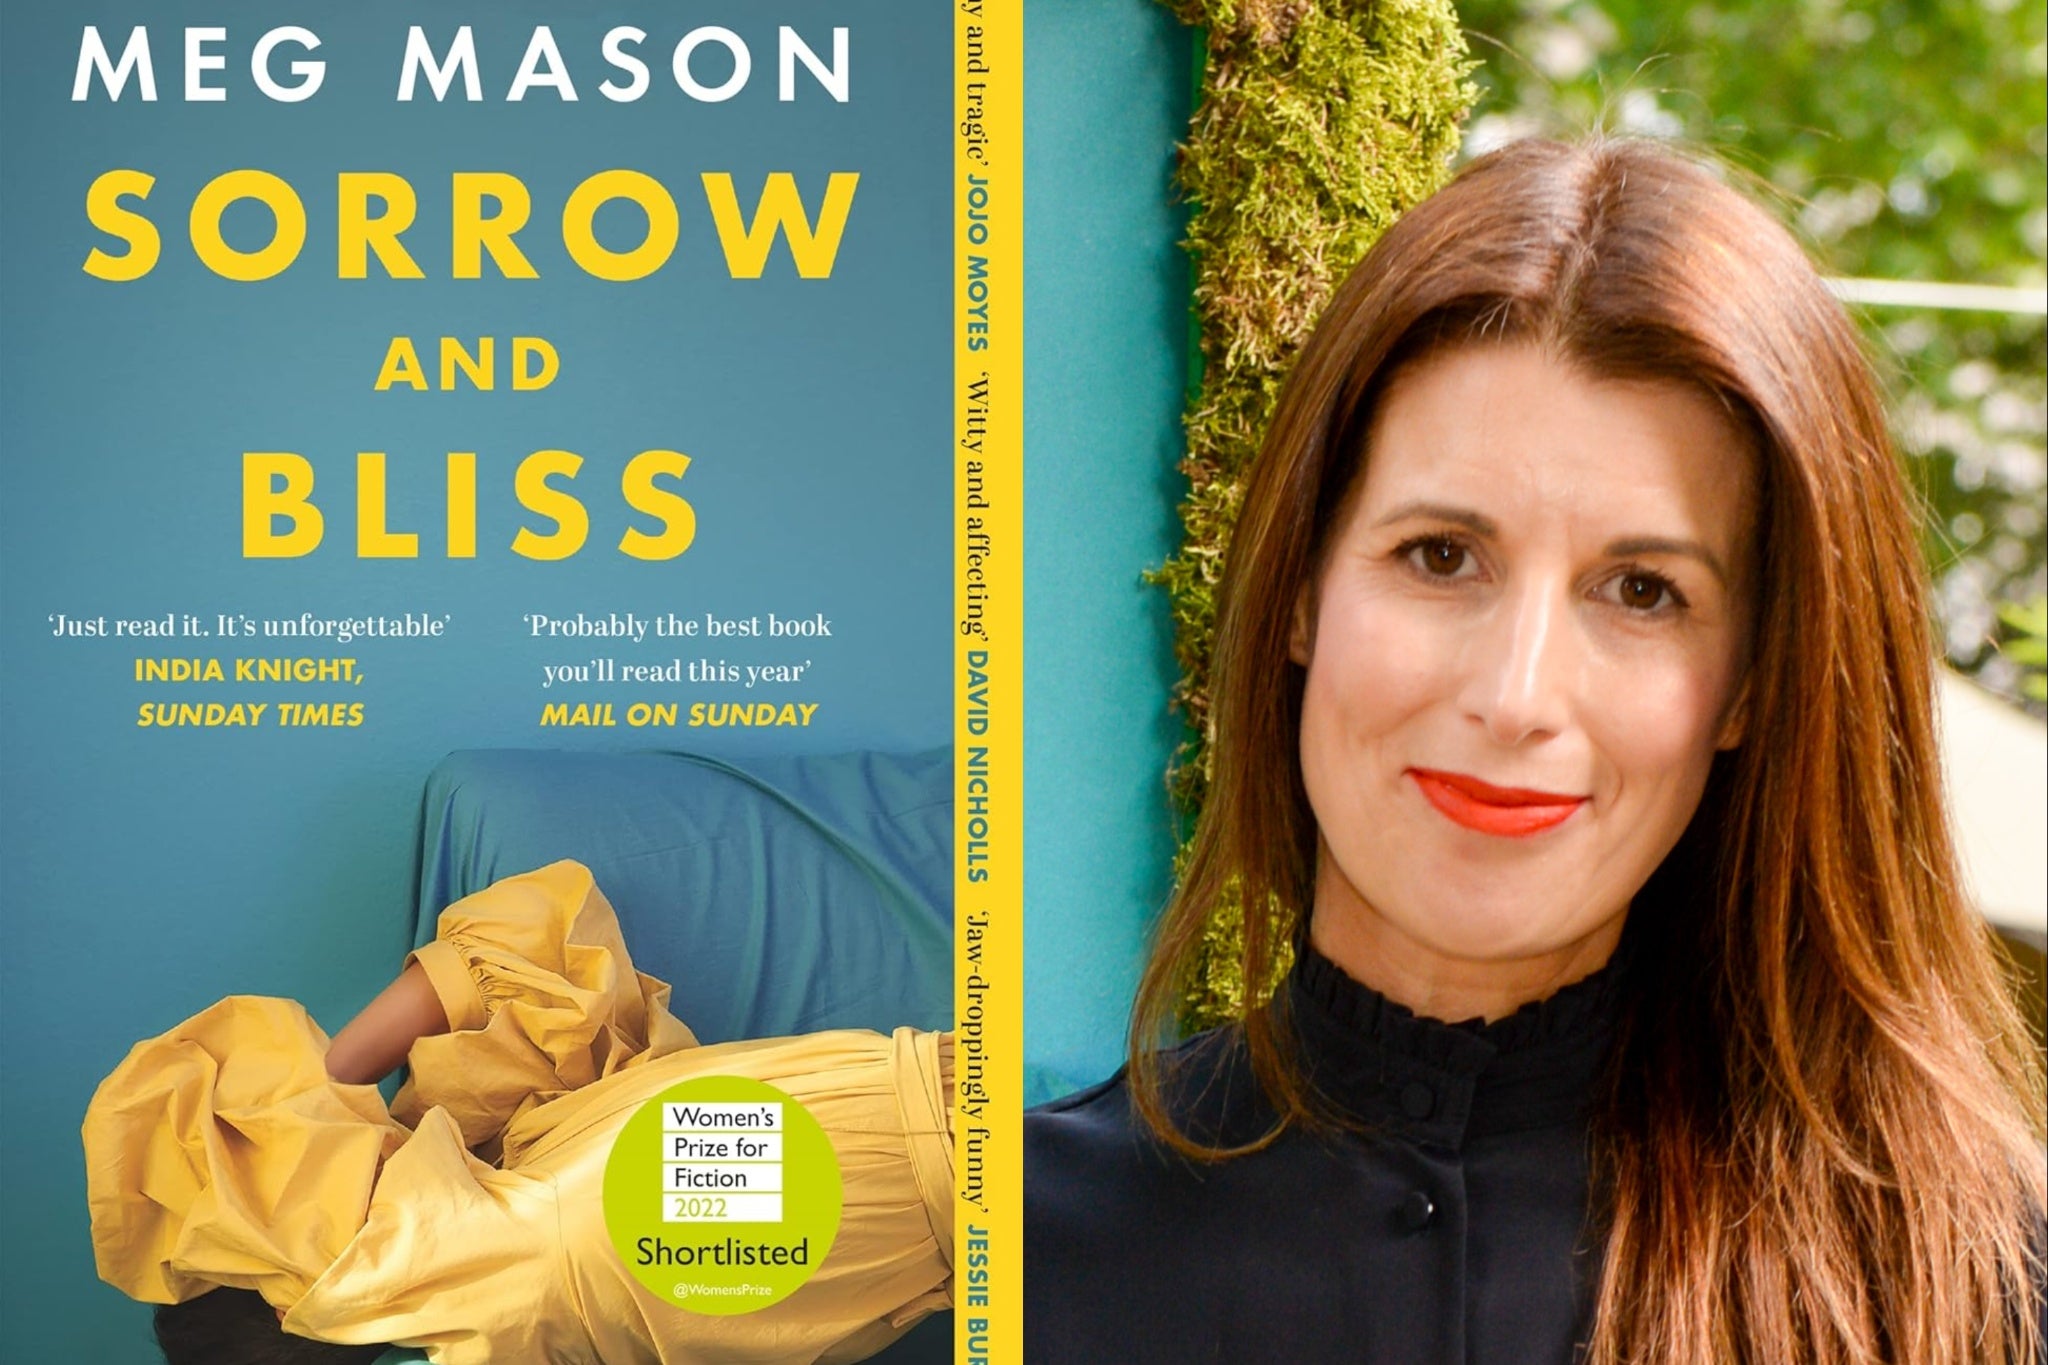 Meg Mason, author of ‘Sorrow and Bliss'